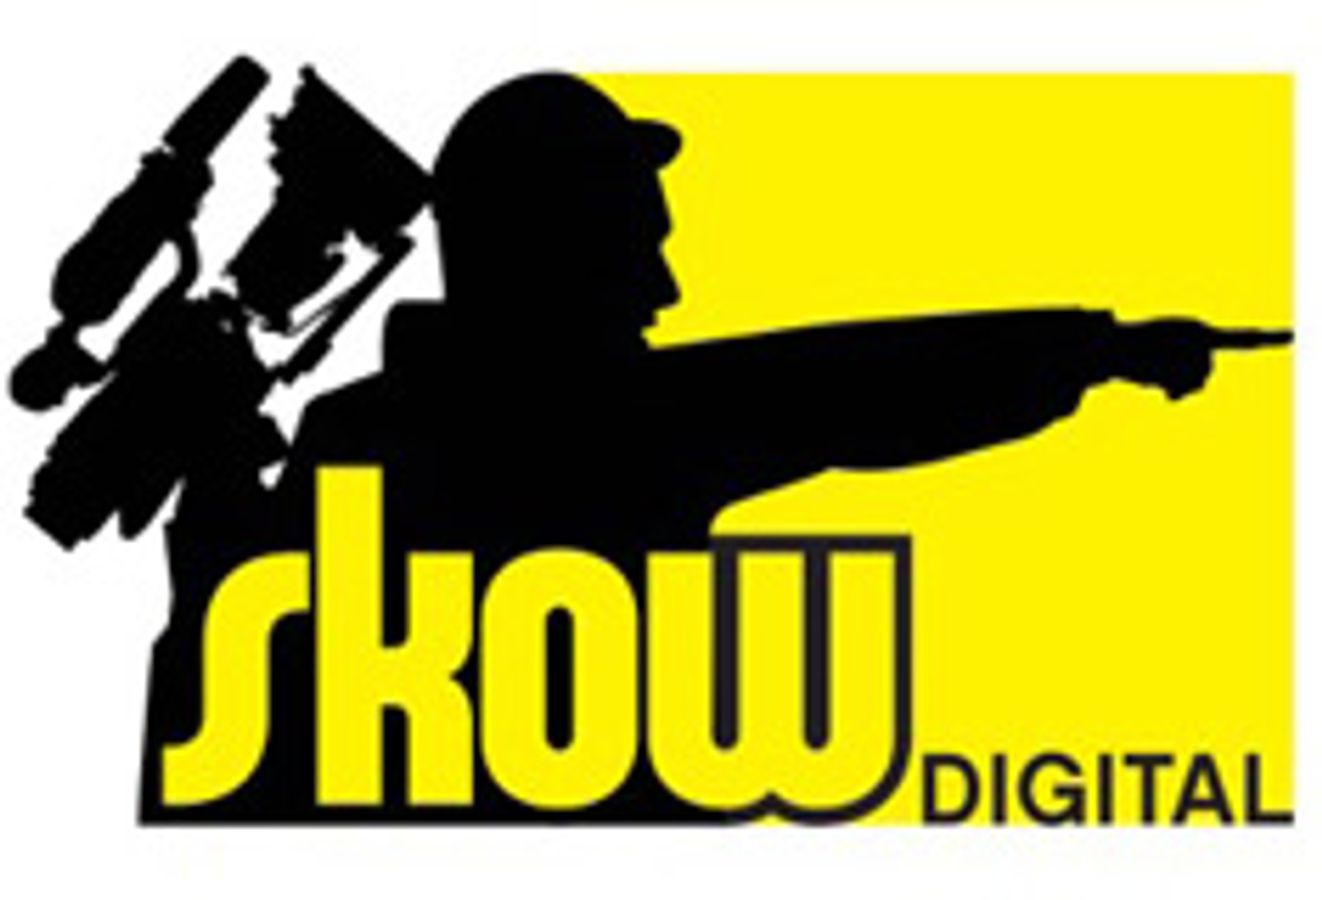 Skow Digital